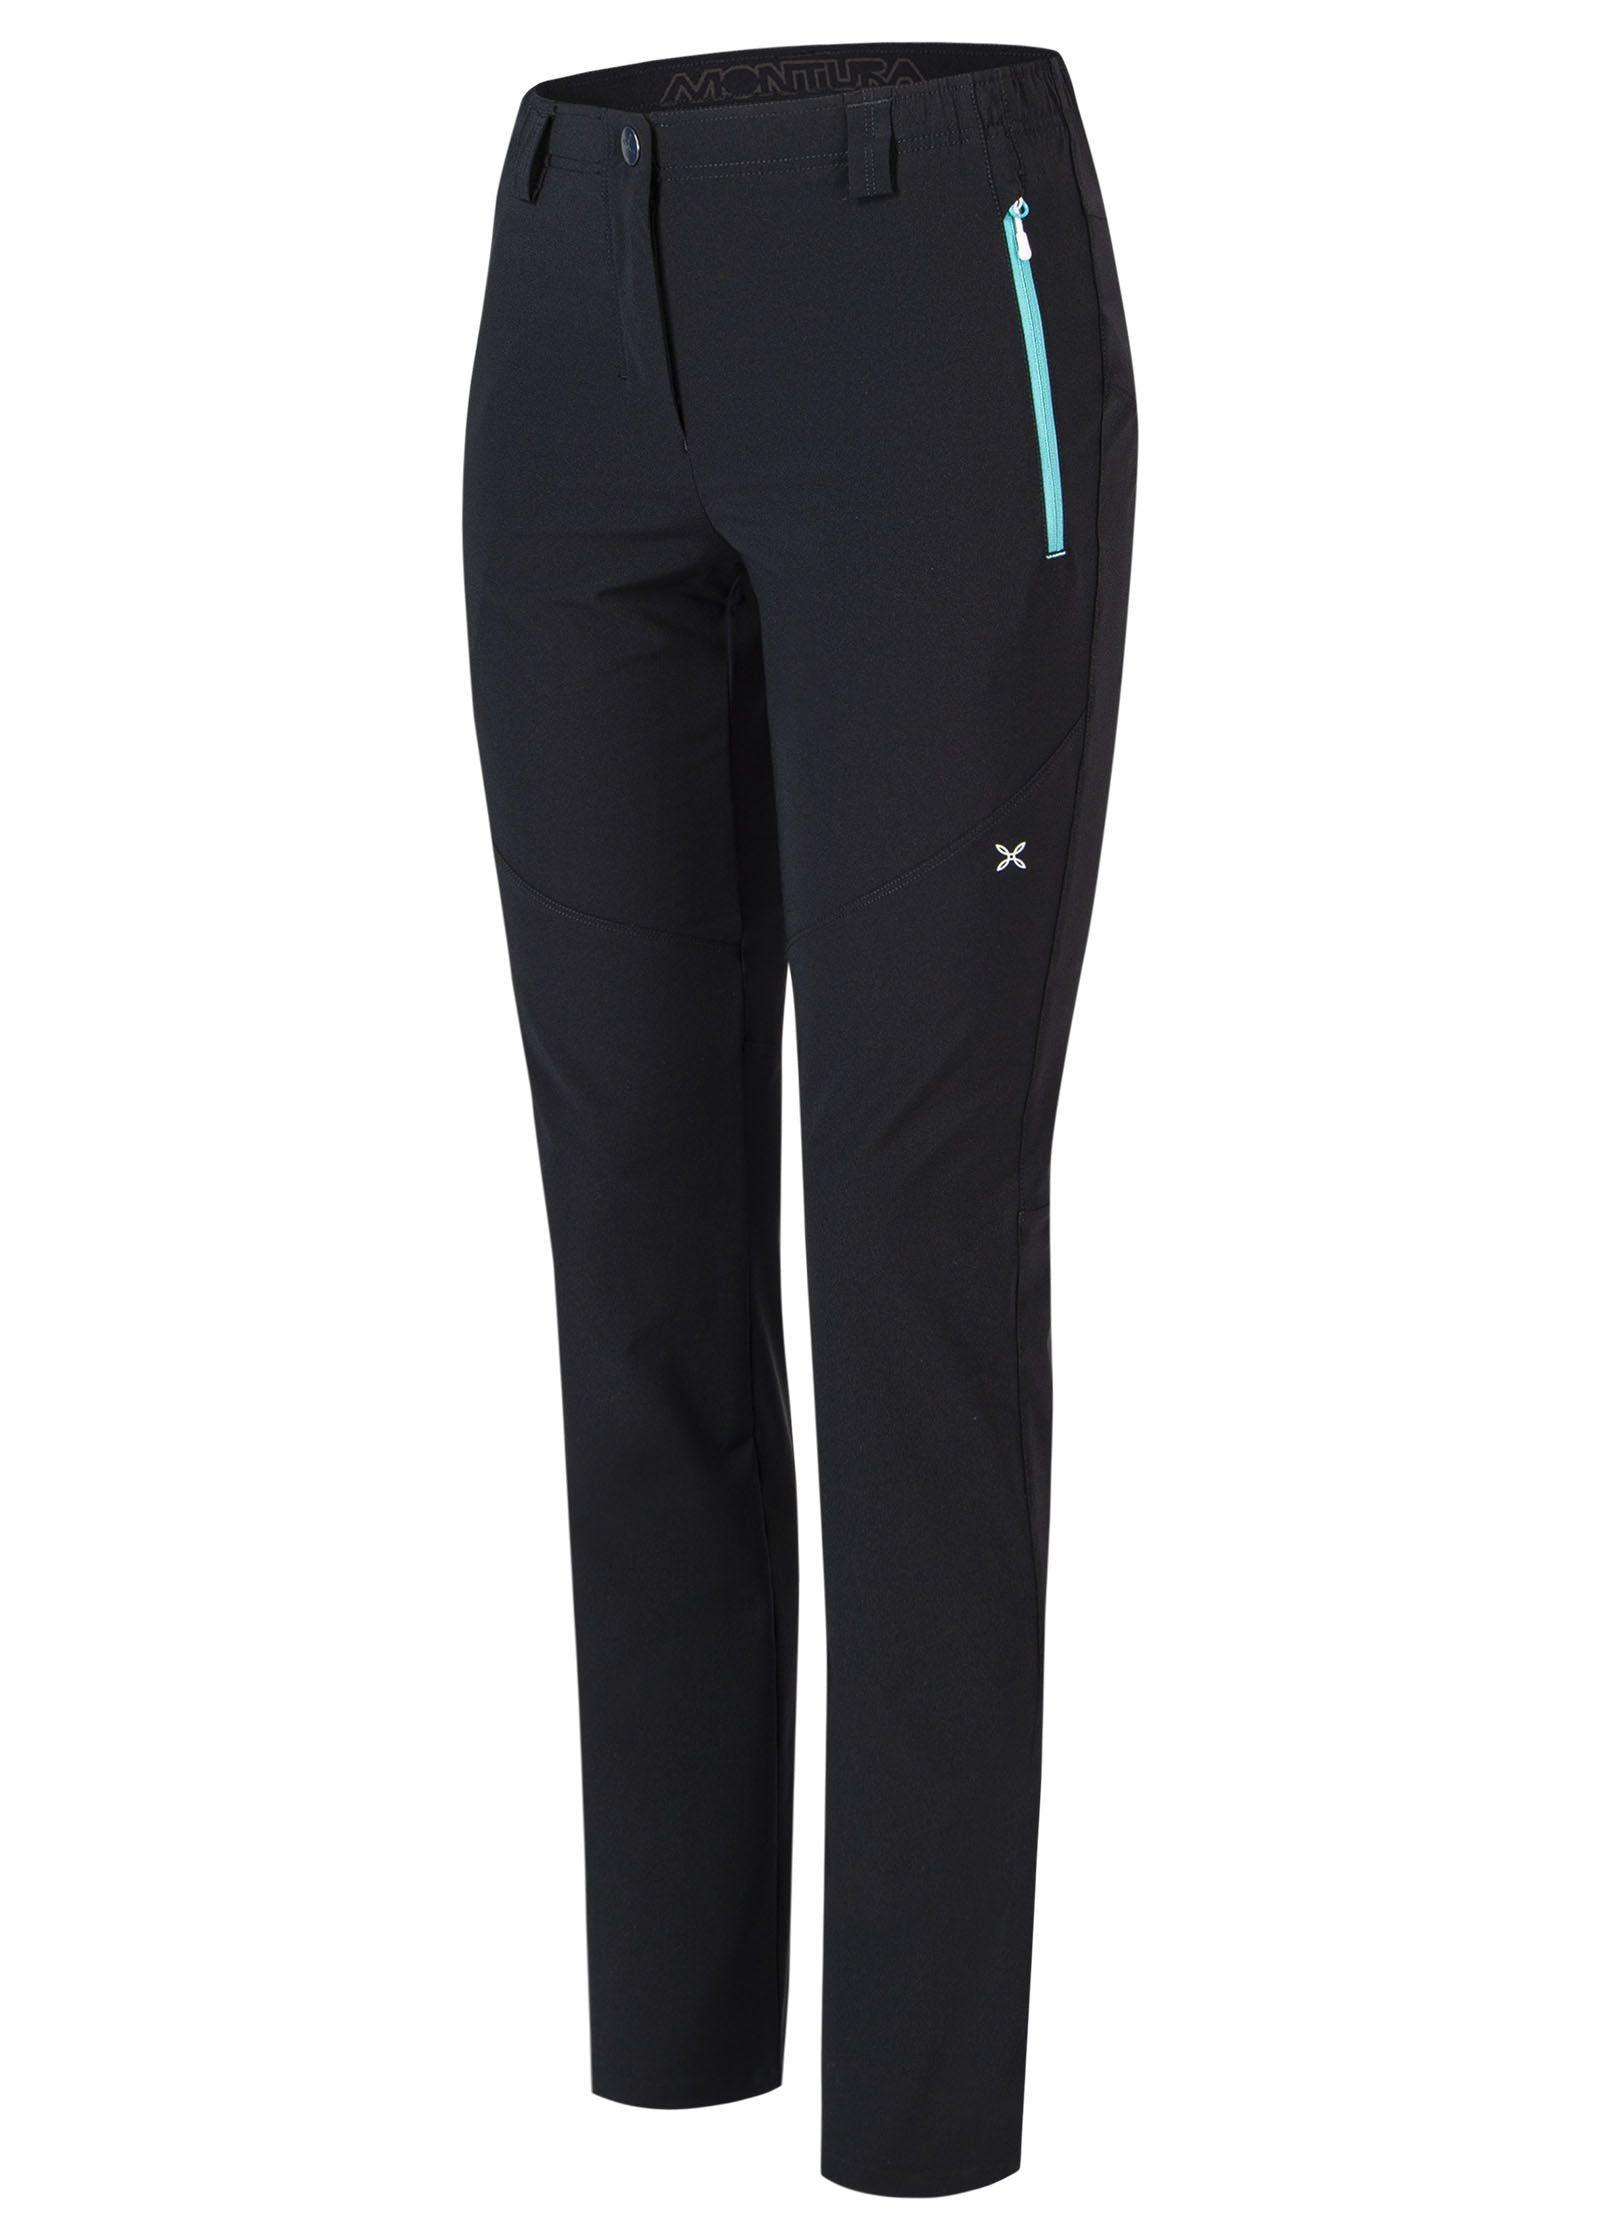 Montura | Pantaloni Focus Donna Nero/Care Blue - Fabbrica Ski Sises